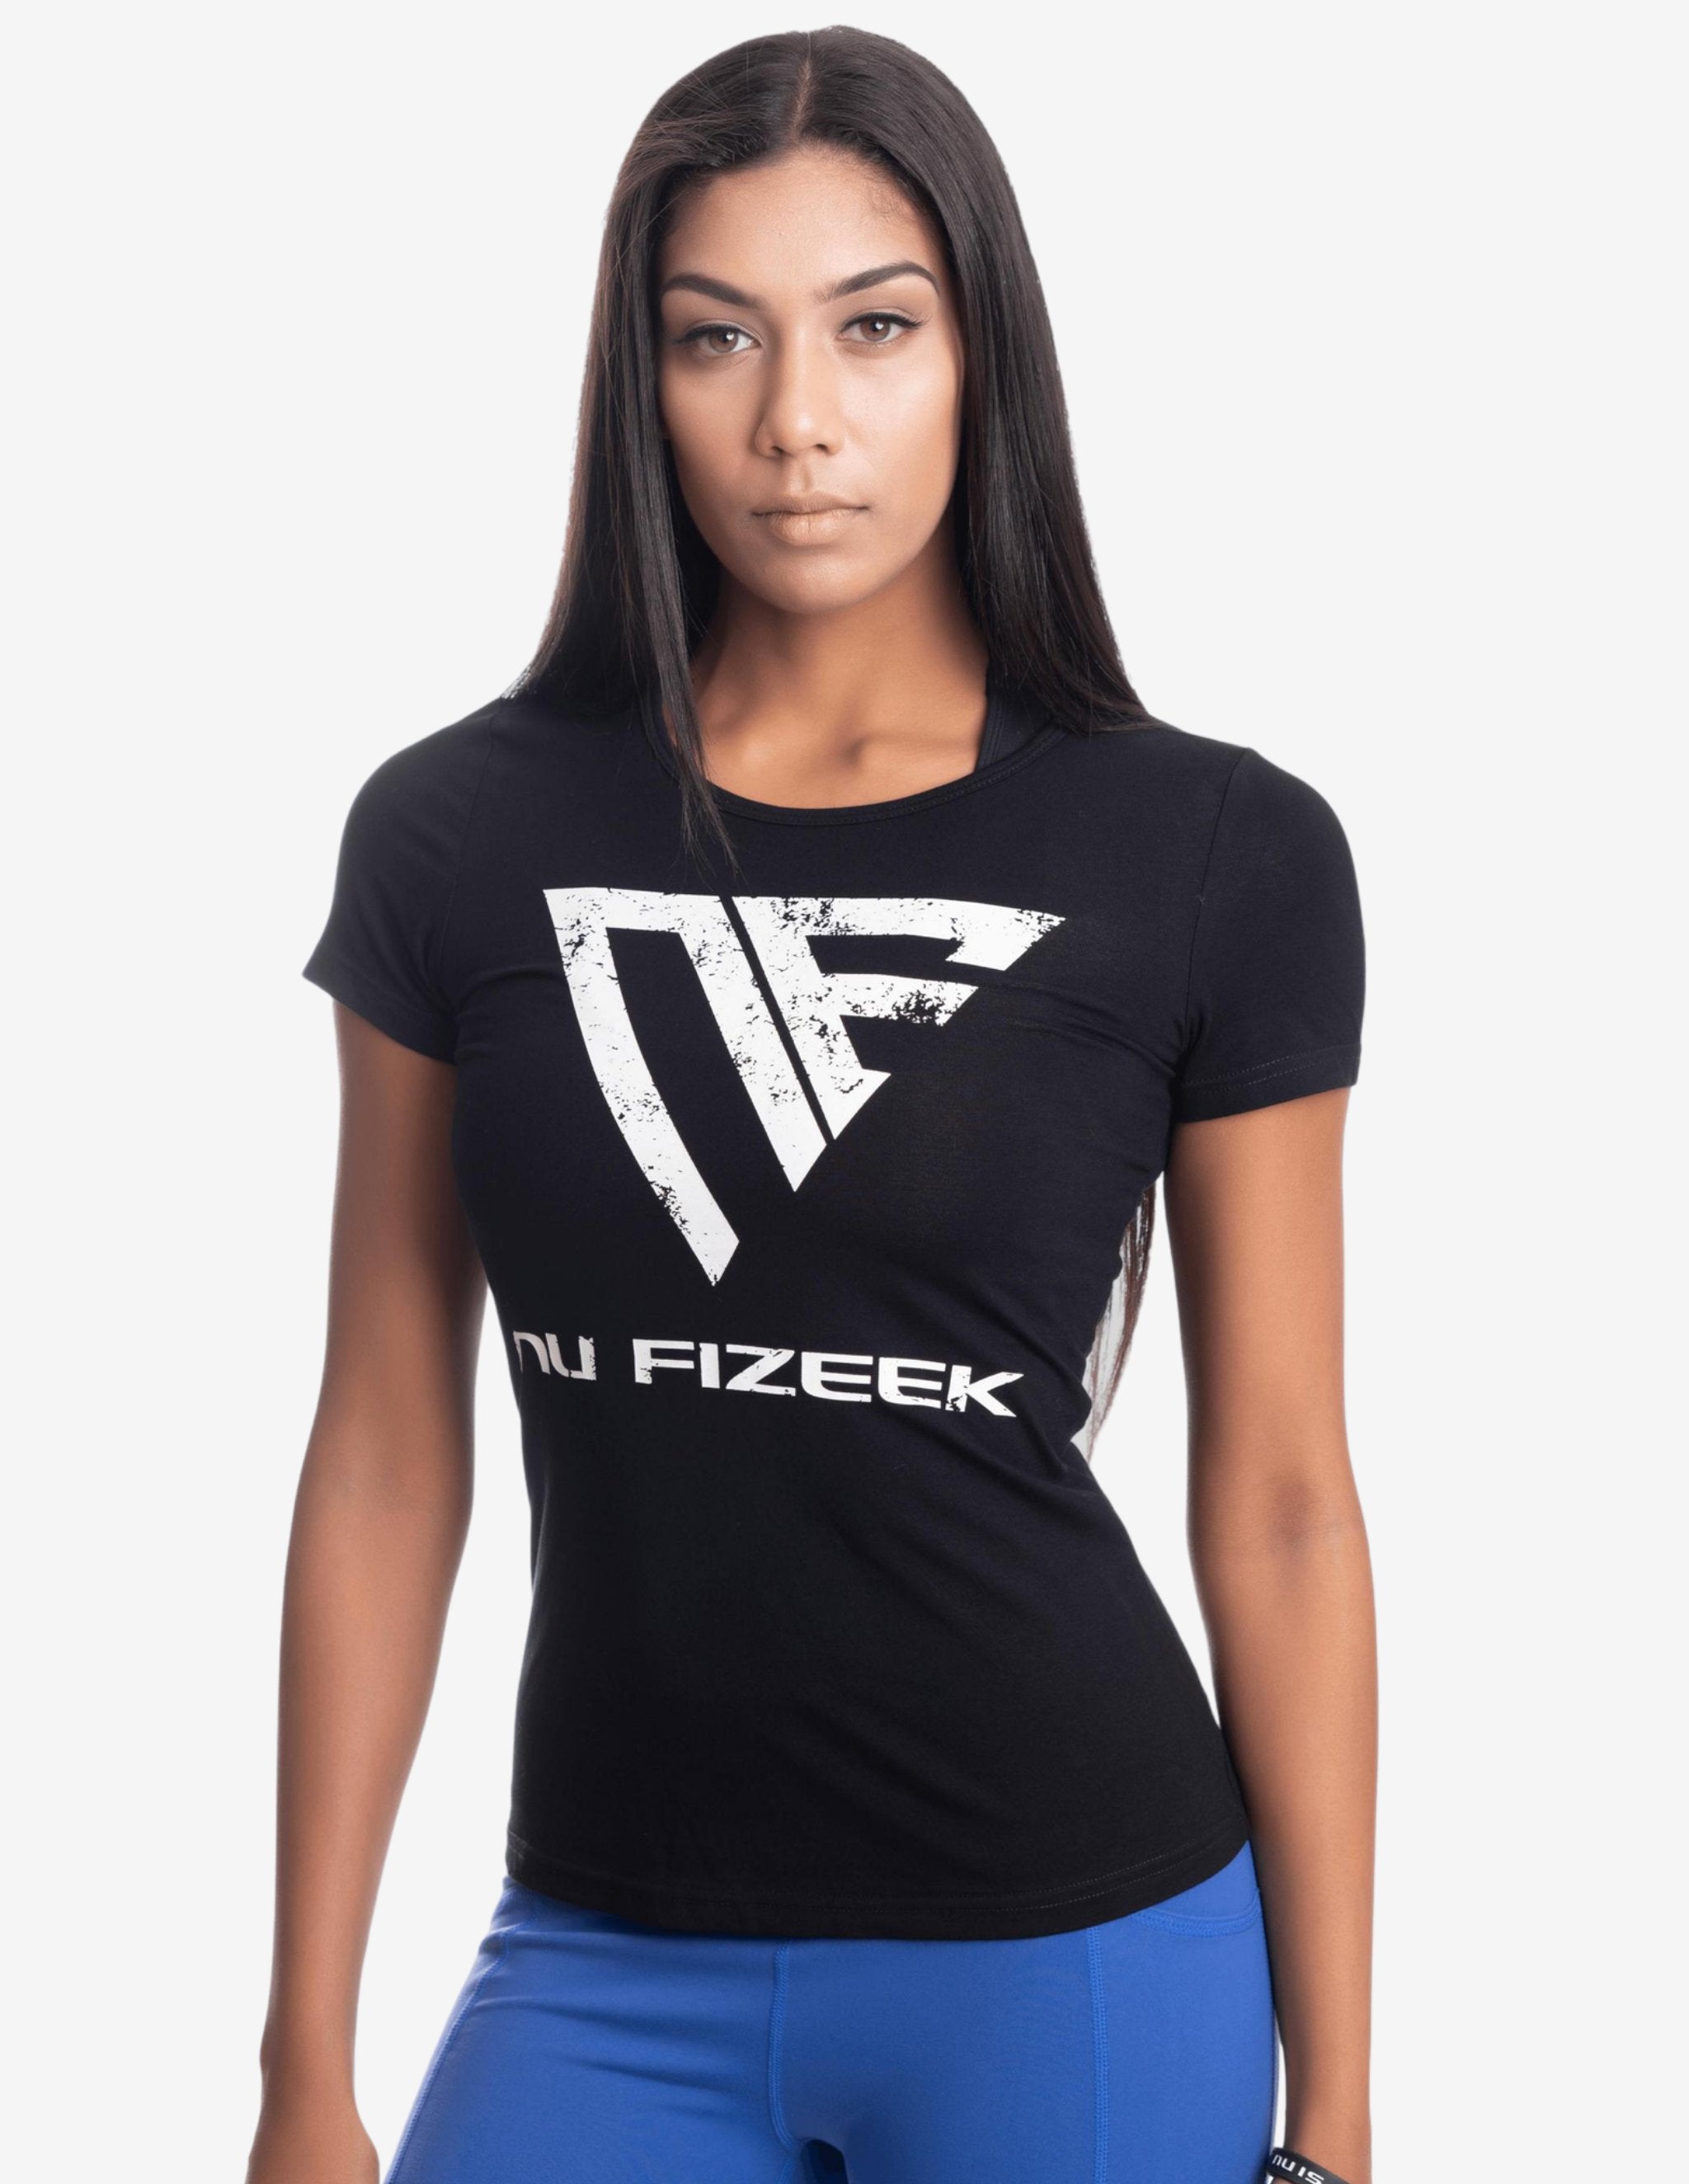 NU Attitude Tee-T-shirt Woman-NU FIZEEK-Guru Muscle